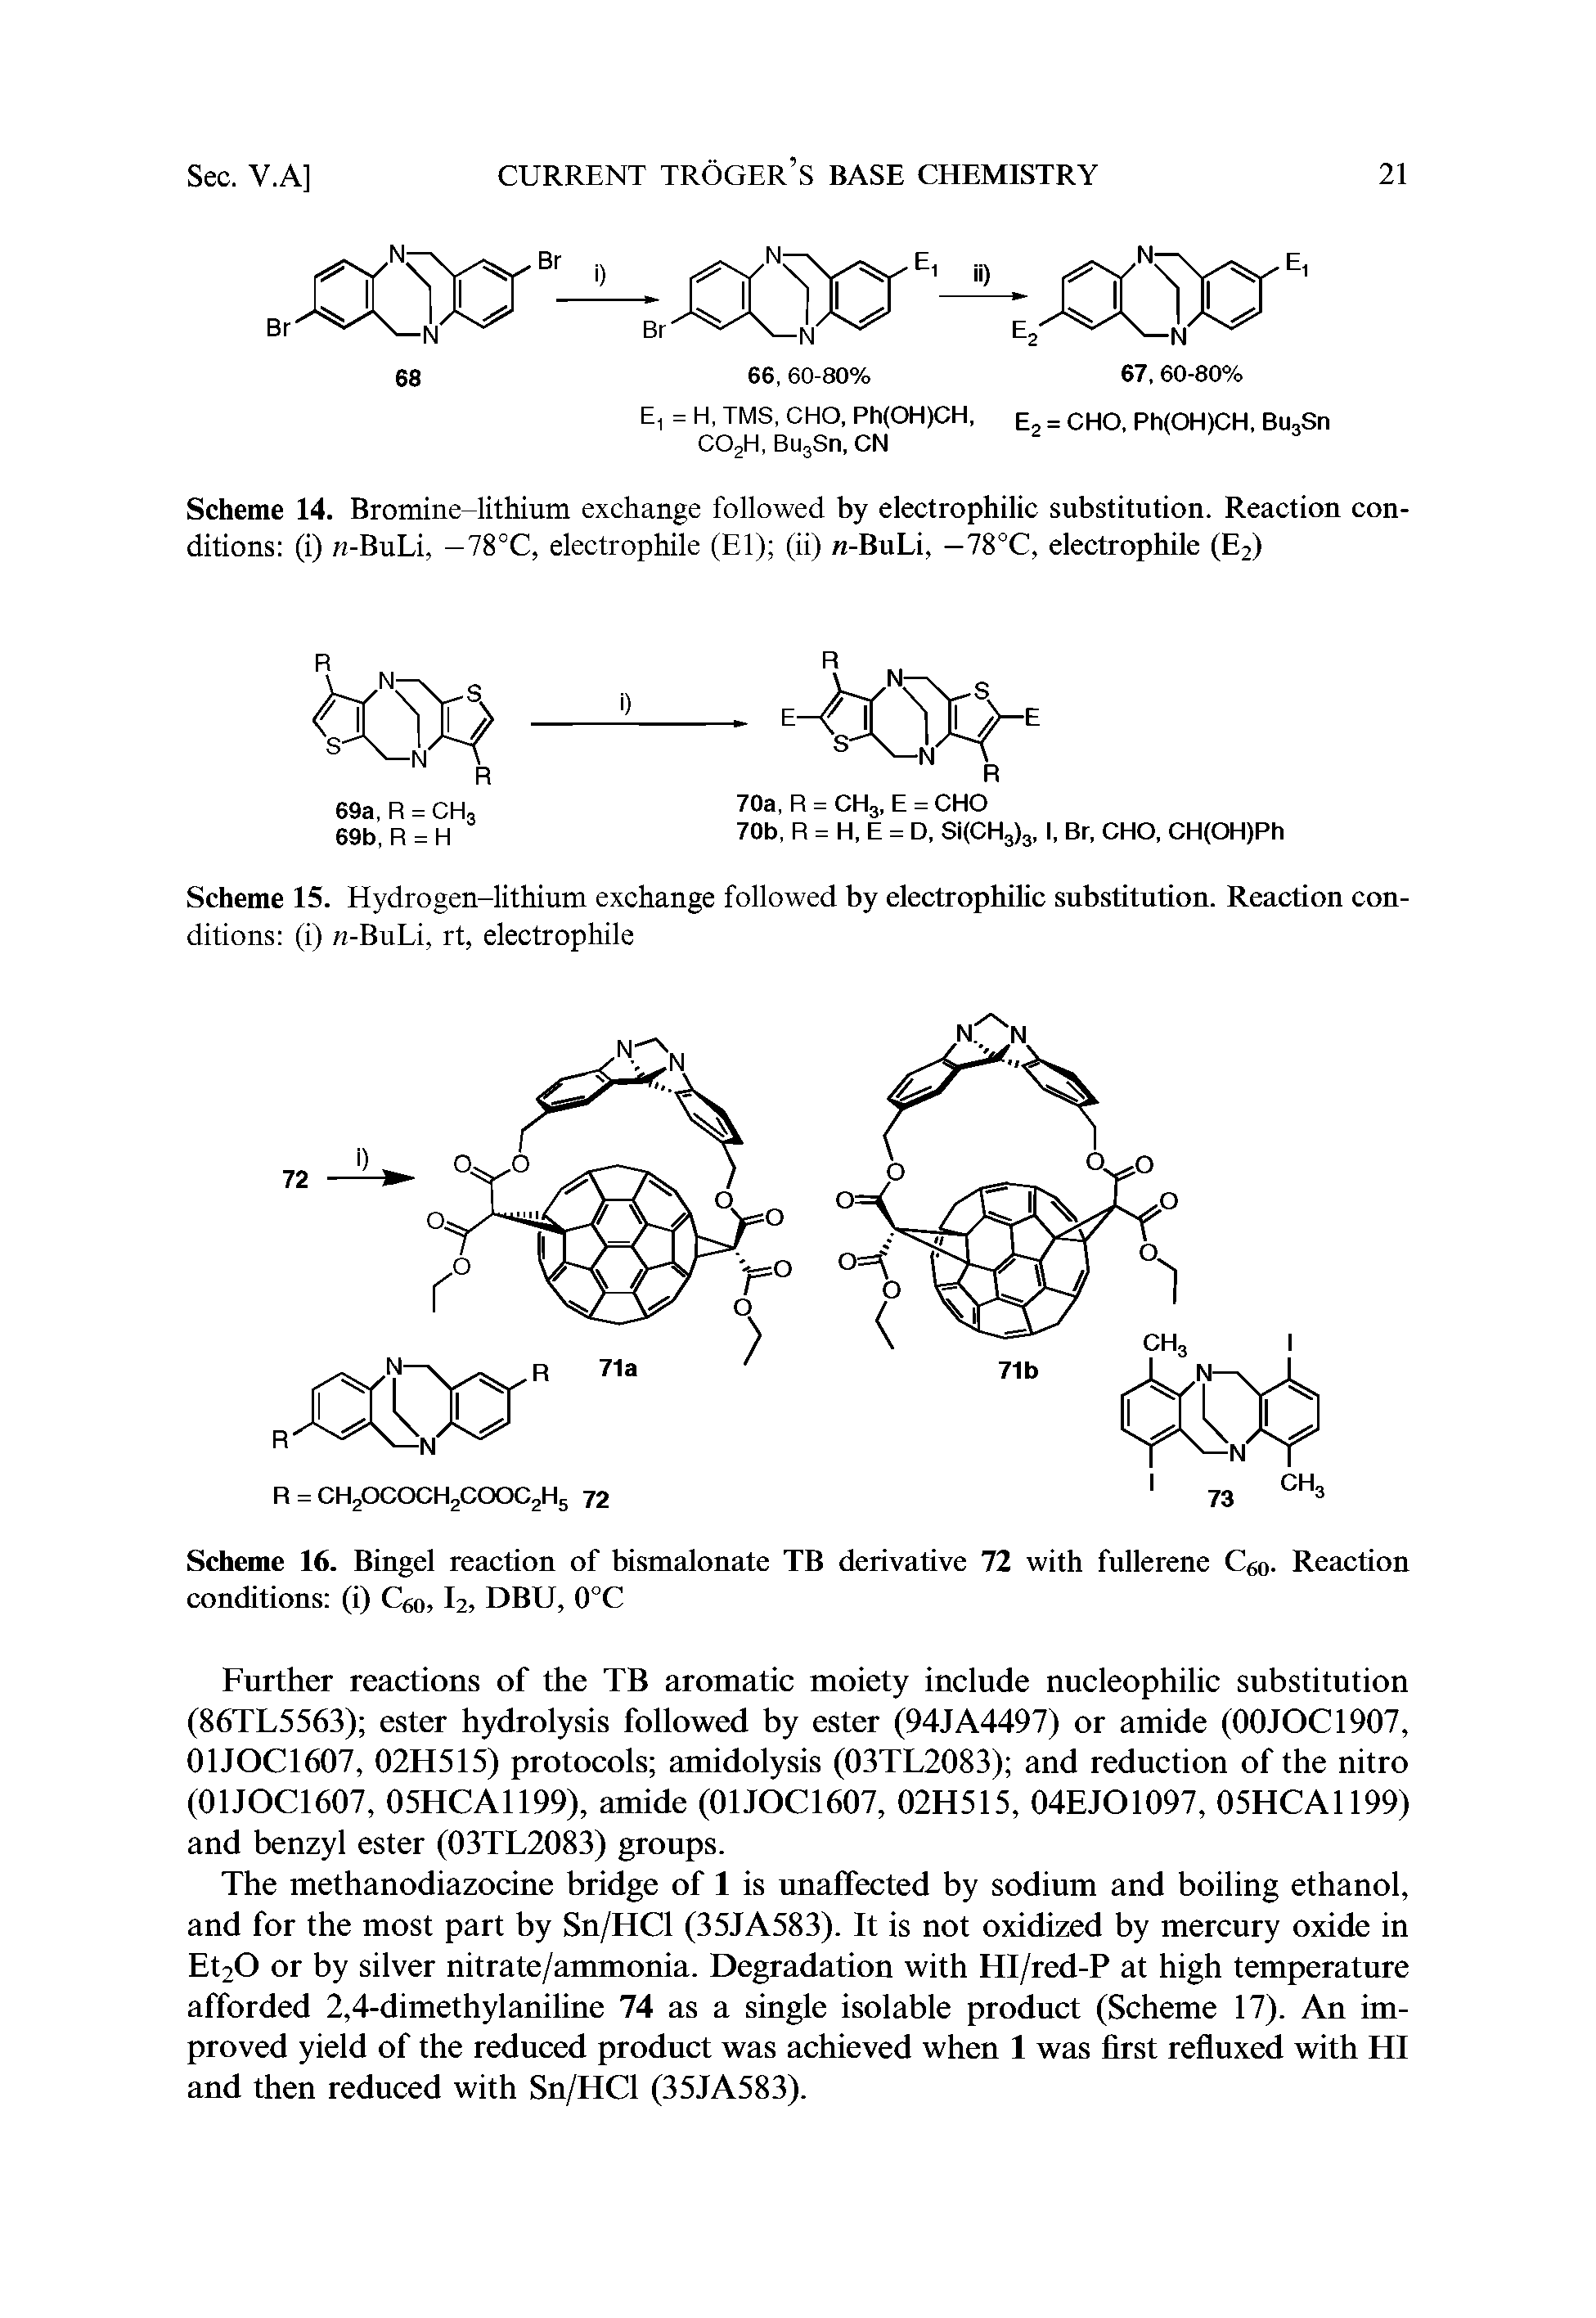 Scheme 16. Bingel reaction of bismalonate TB derivative 72 with fullerene C60. Reaction conditions (i) C60,12, DBU, 0°C...